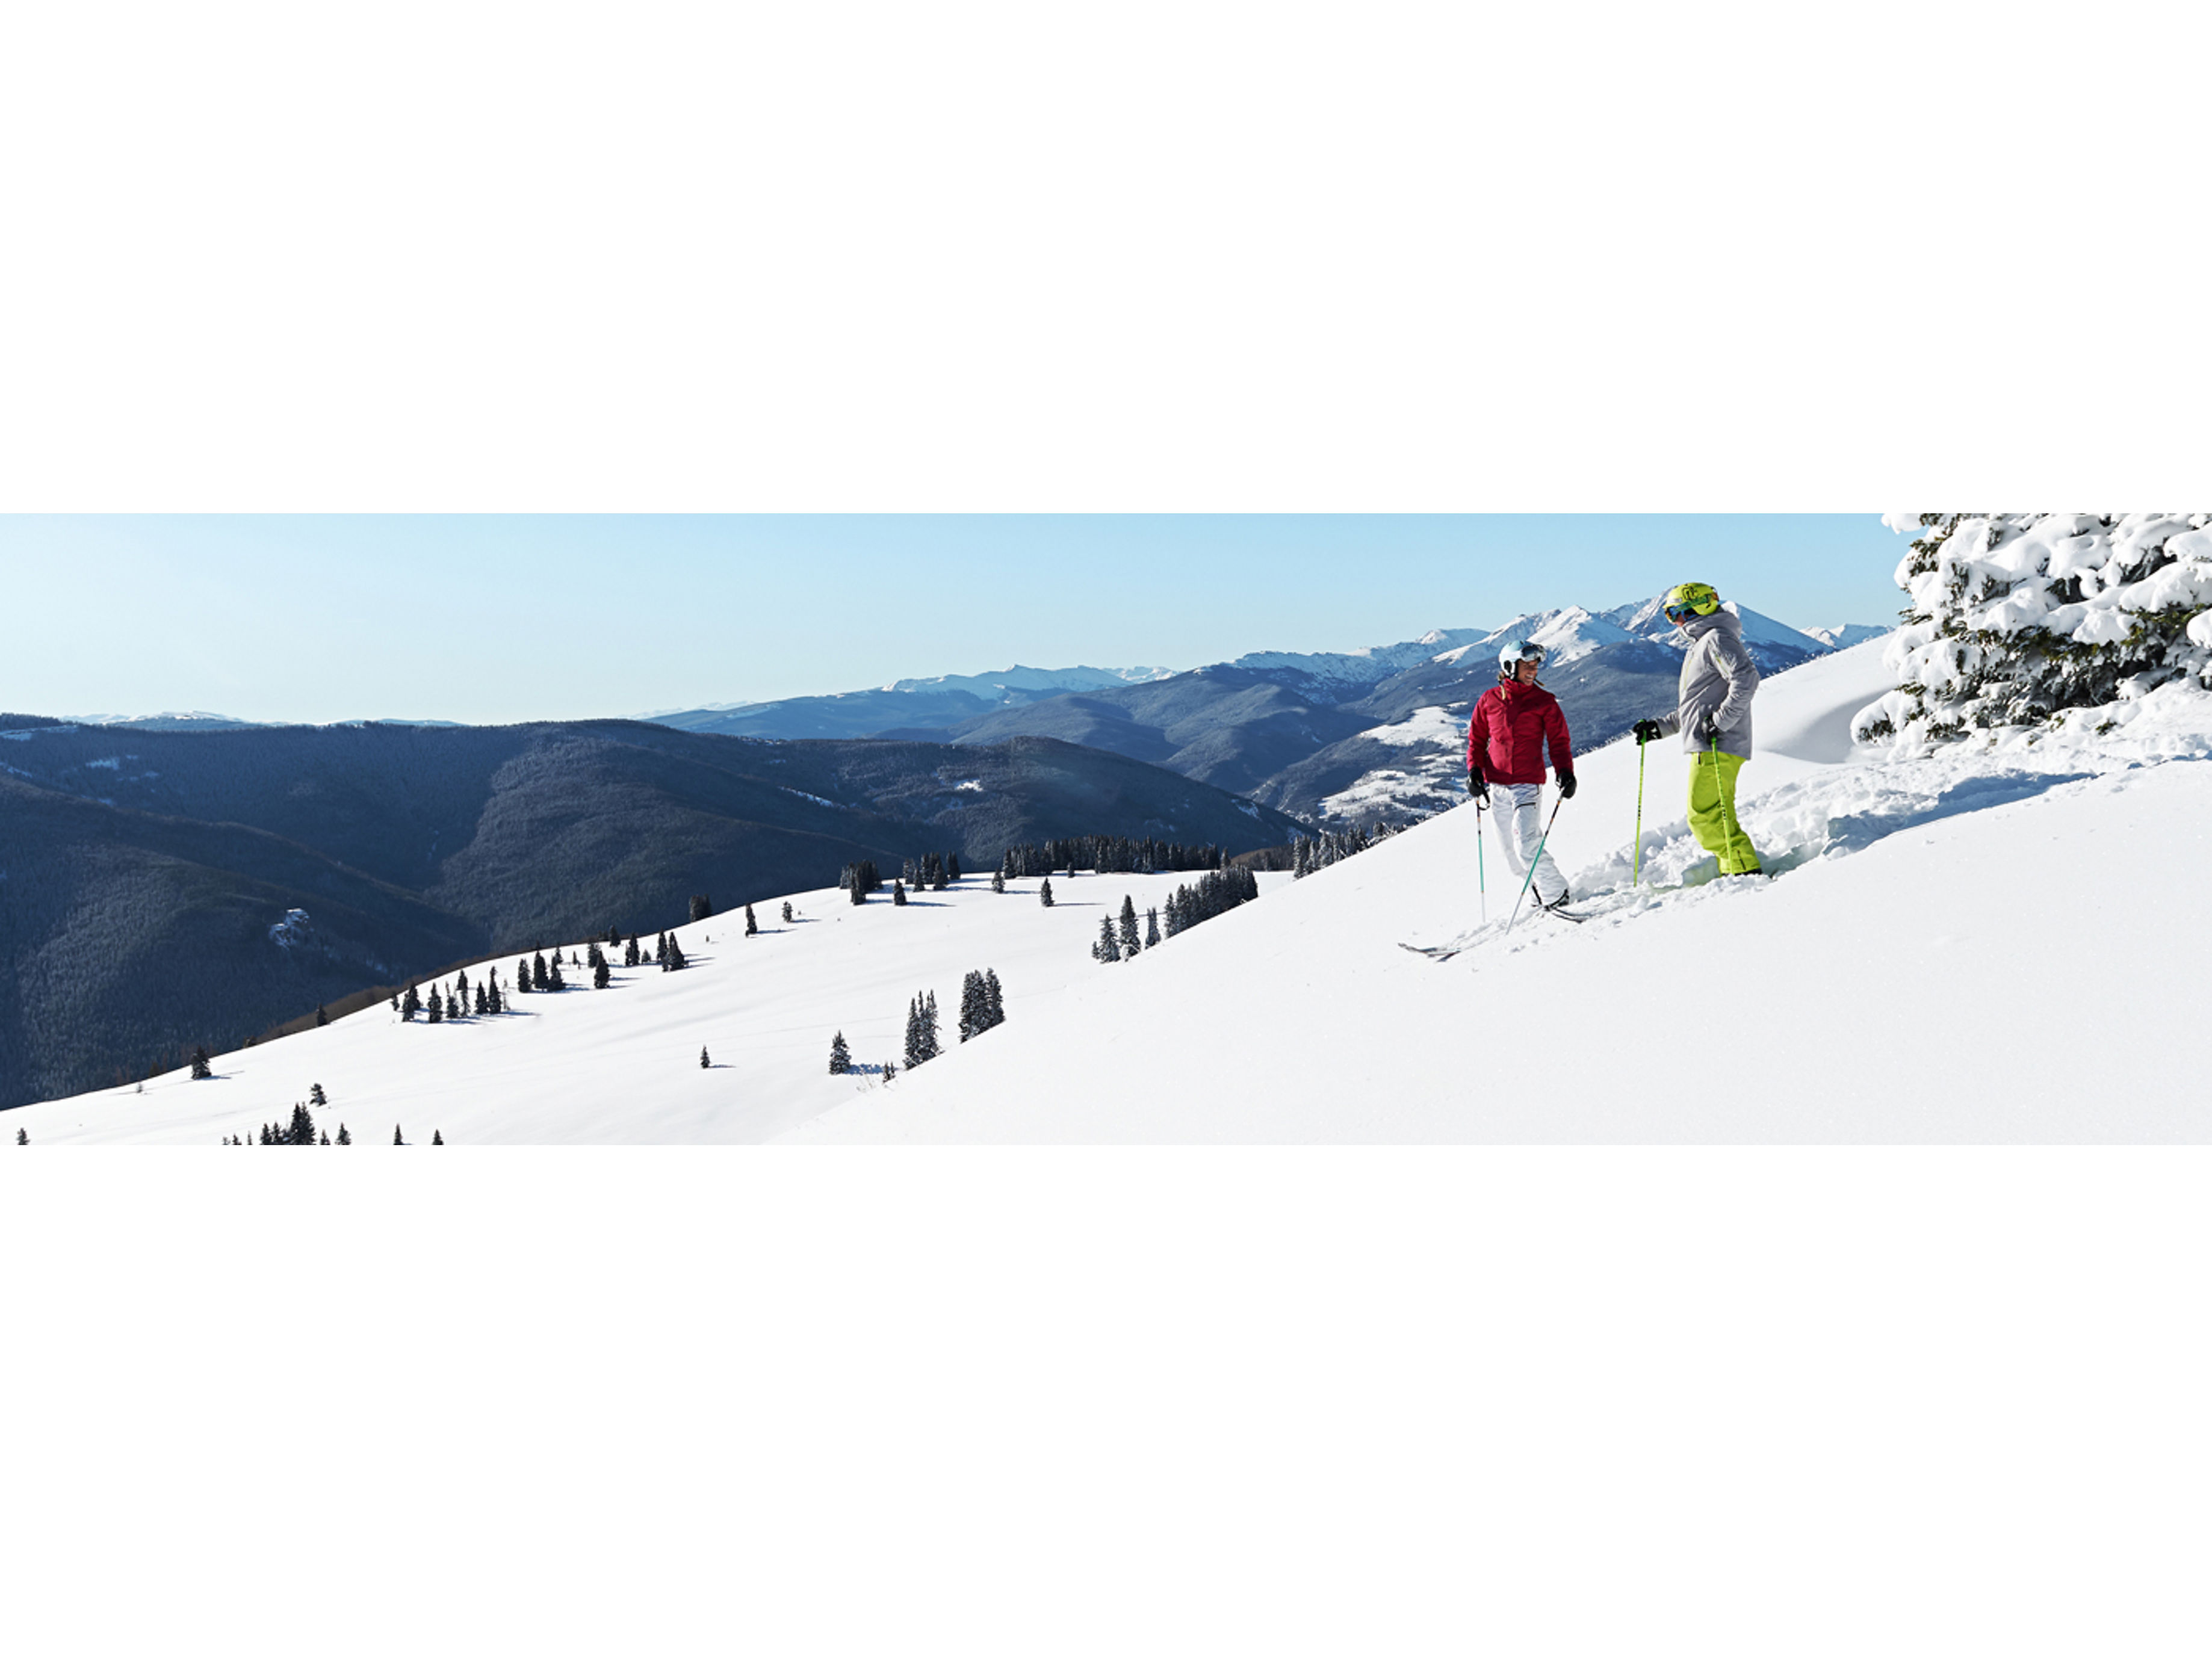 Luxury Ski Resort Experiences